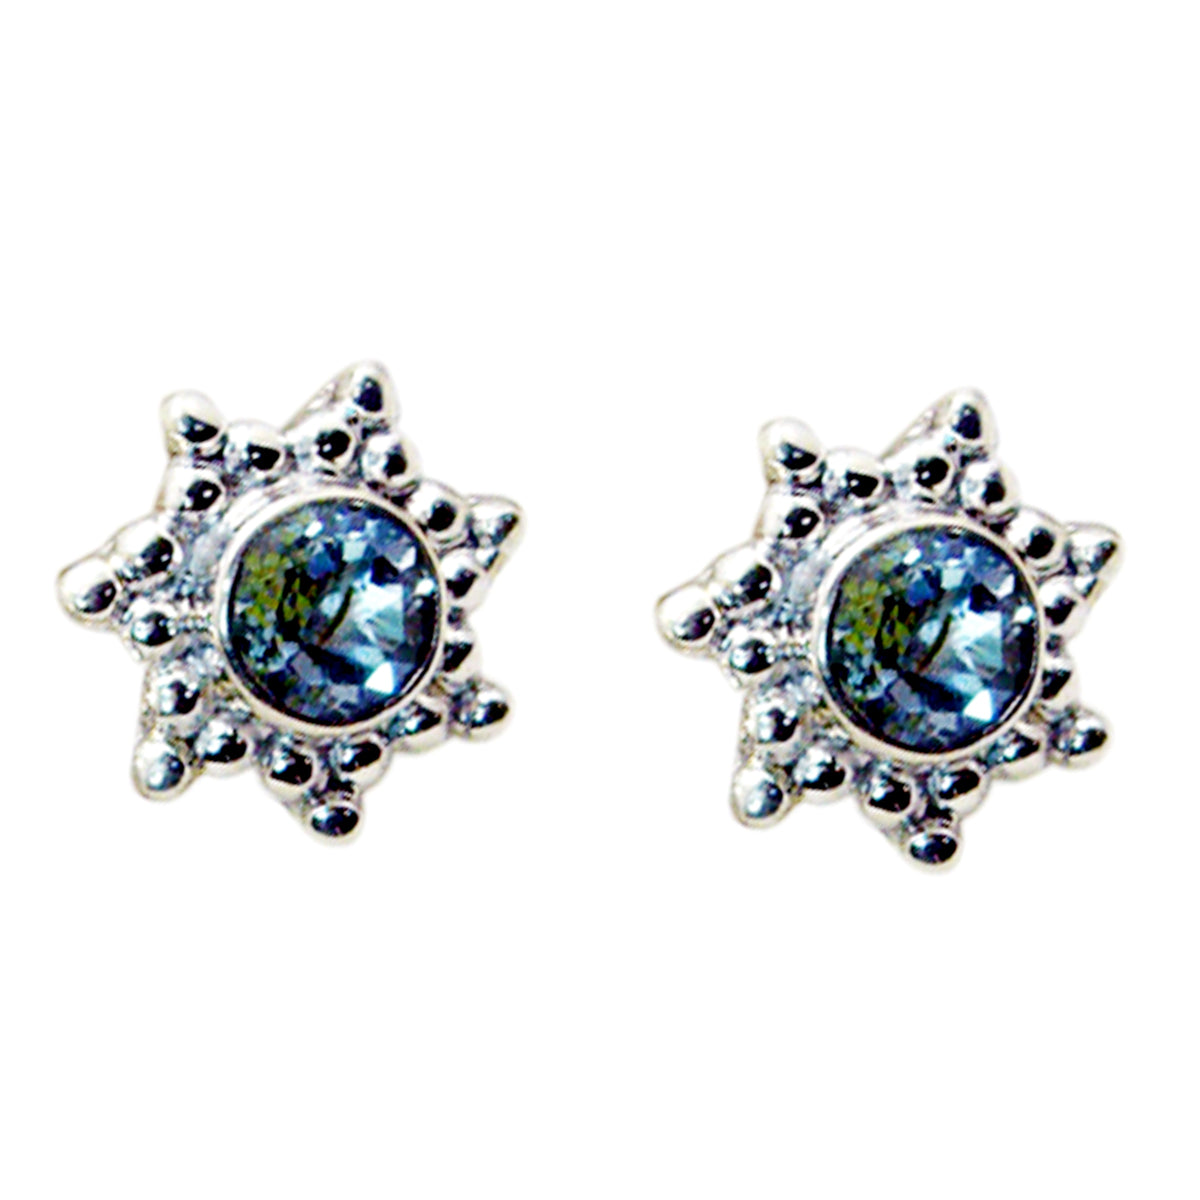 Riyo Good Gemstones round Faceted Blue Topaz Silver Earring gift for black Friday